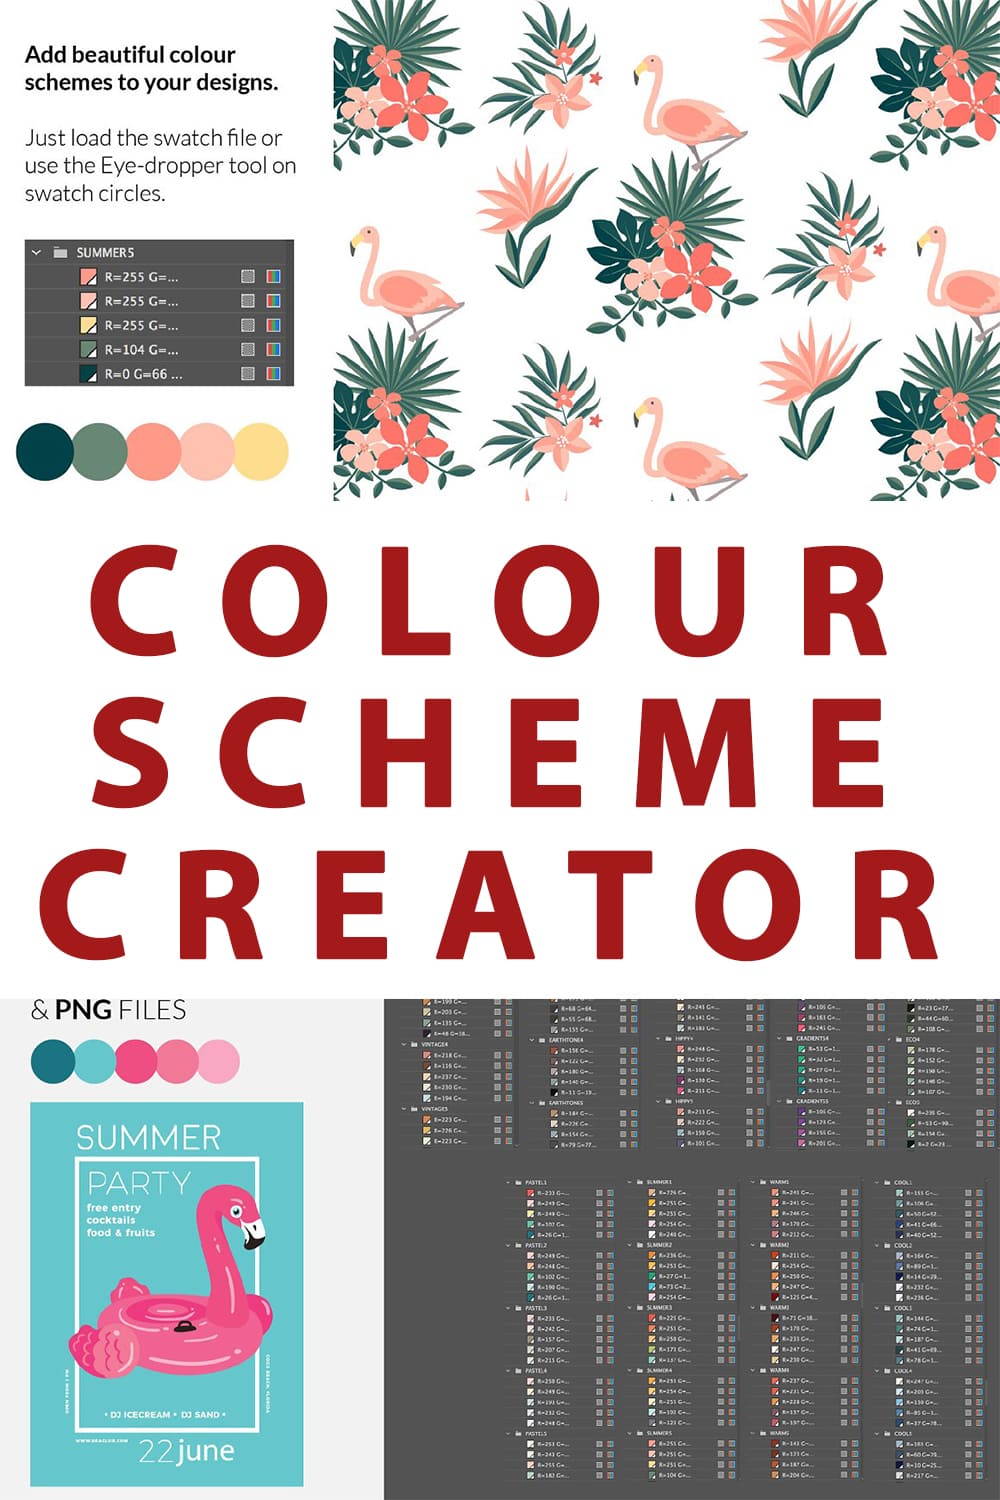 Colour Scheme Creator - "Add Beautiful Colour Schemes To Your Designs".